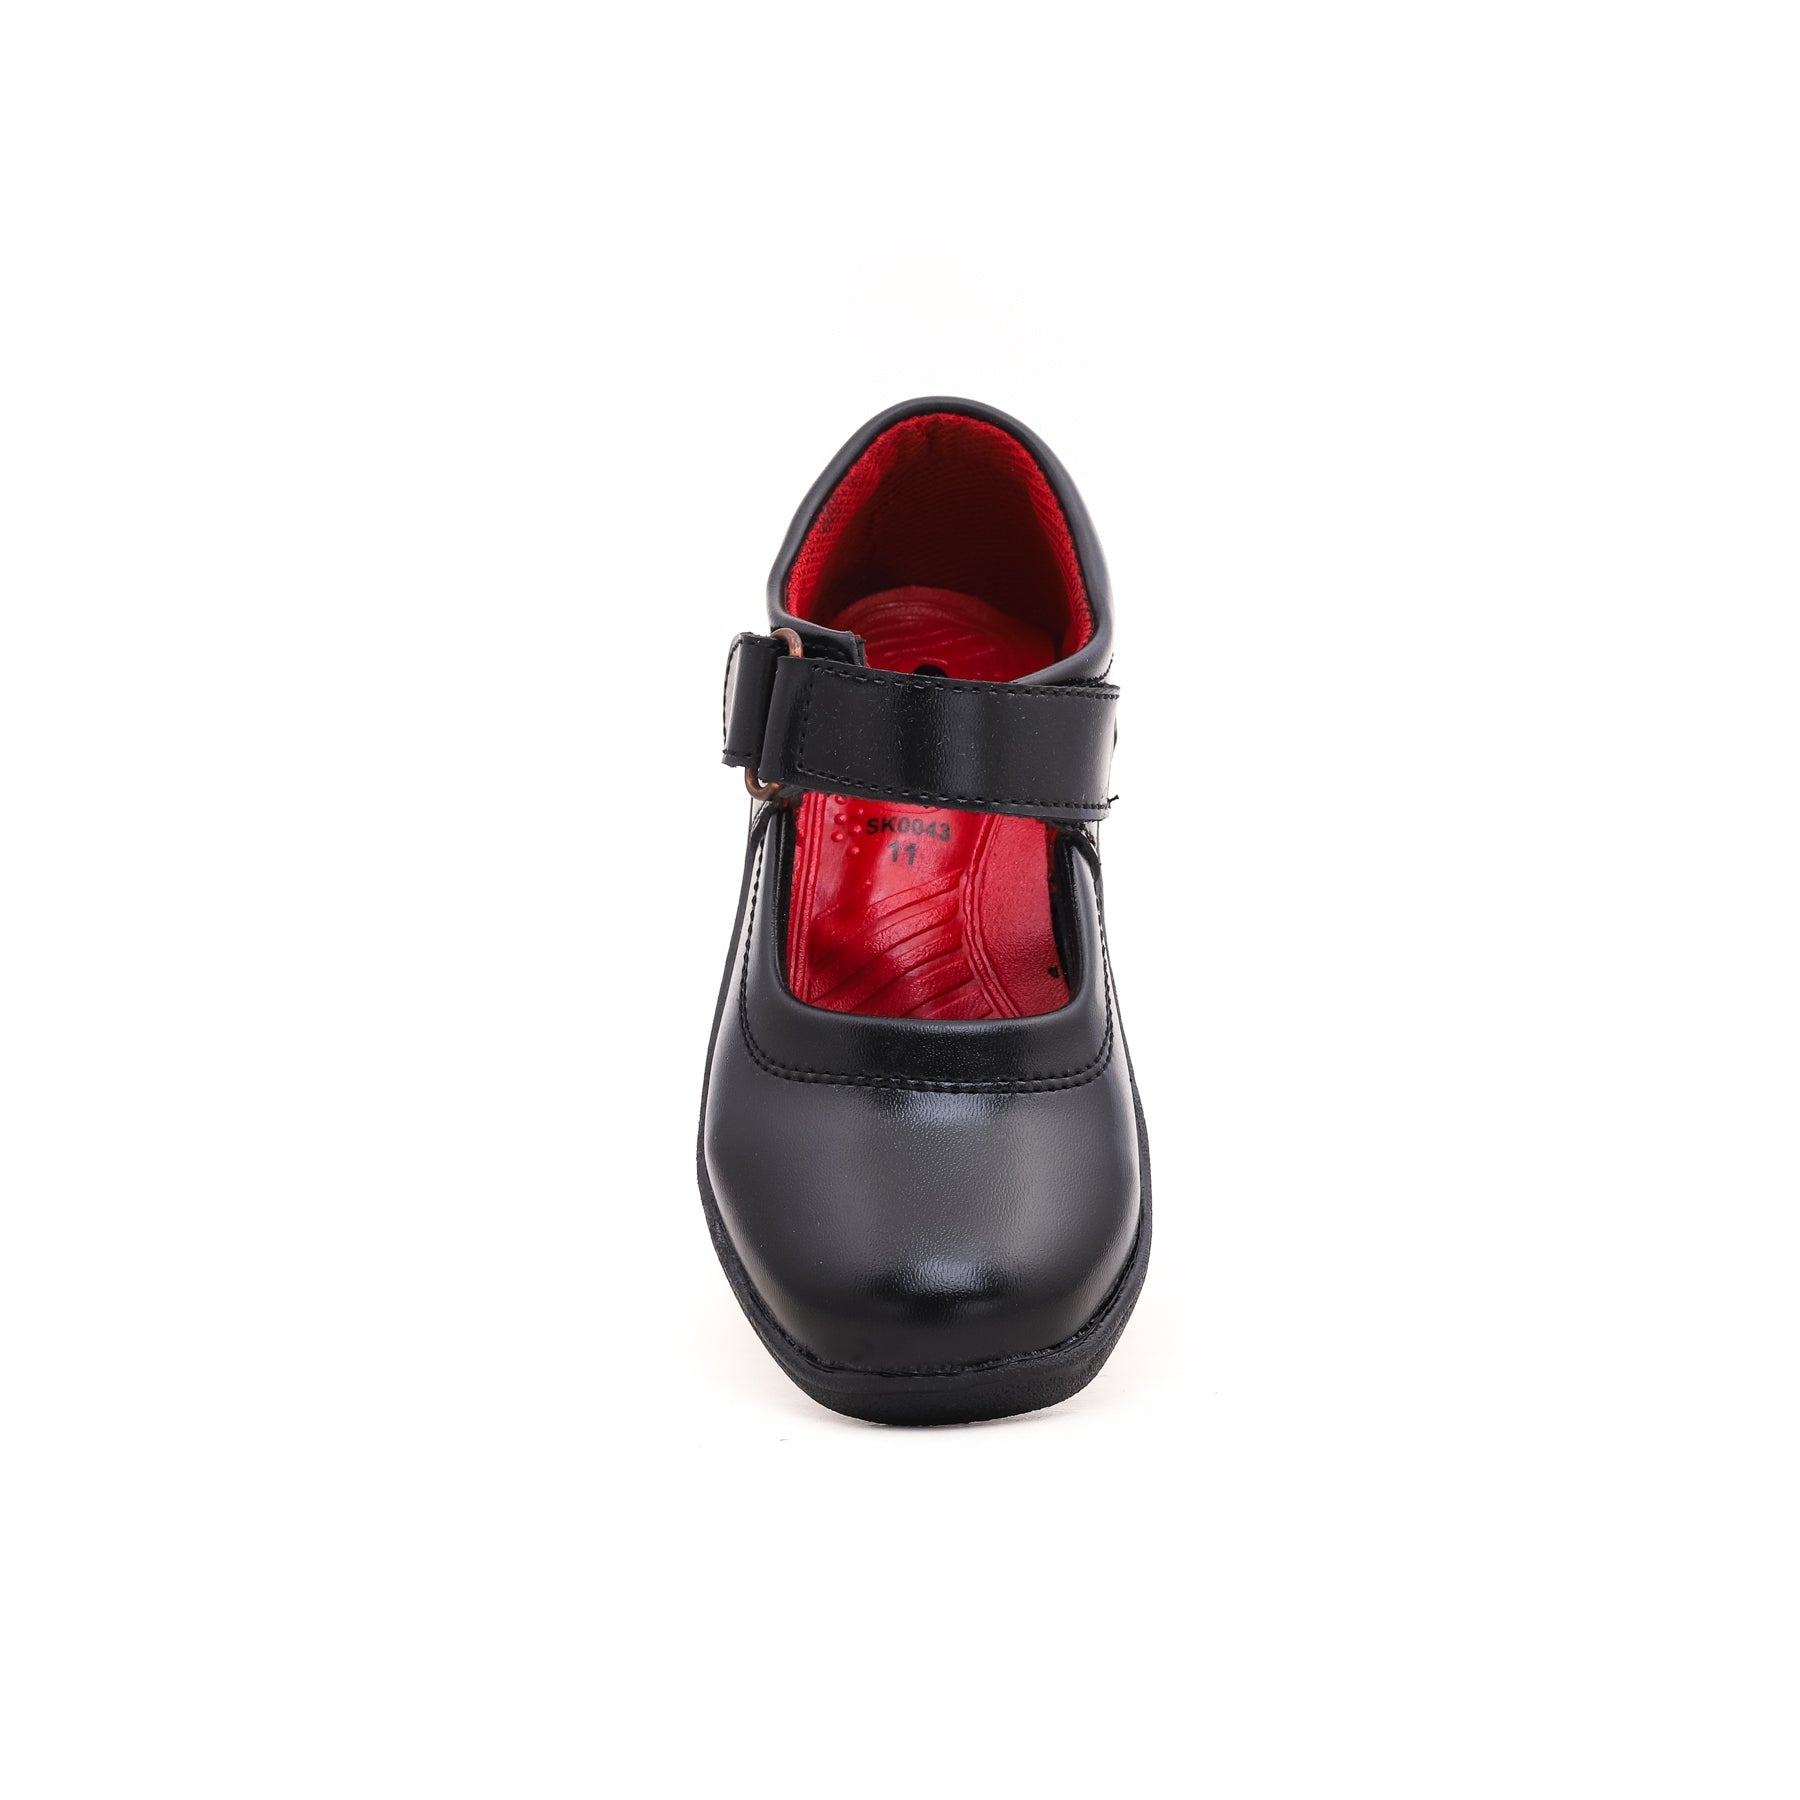 Girls Black School Shoes SK0043